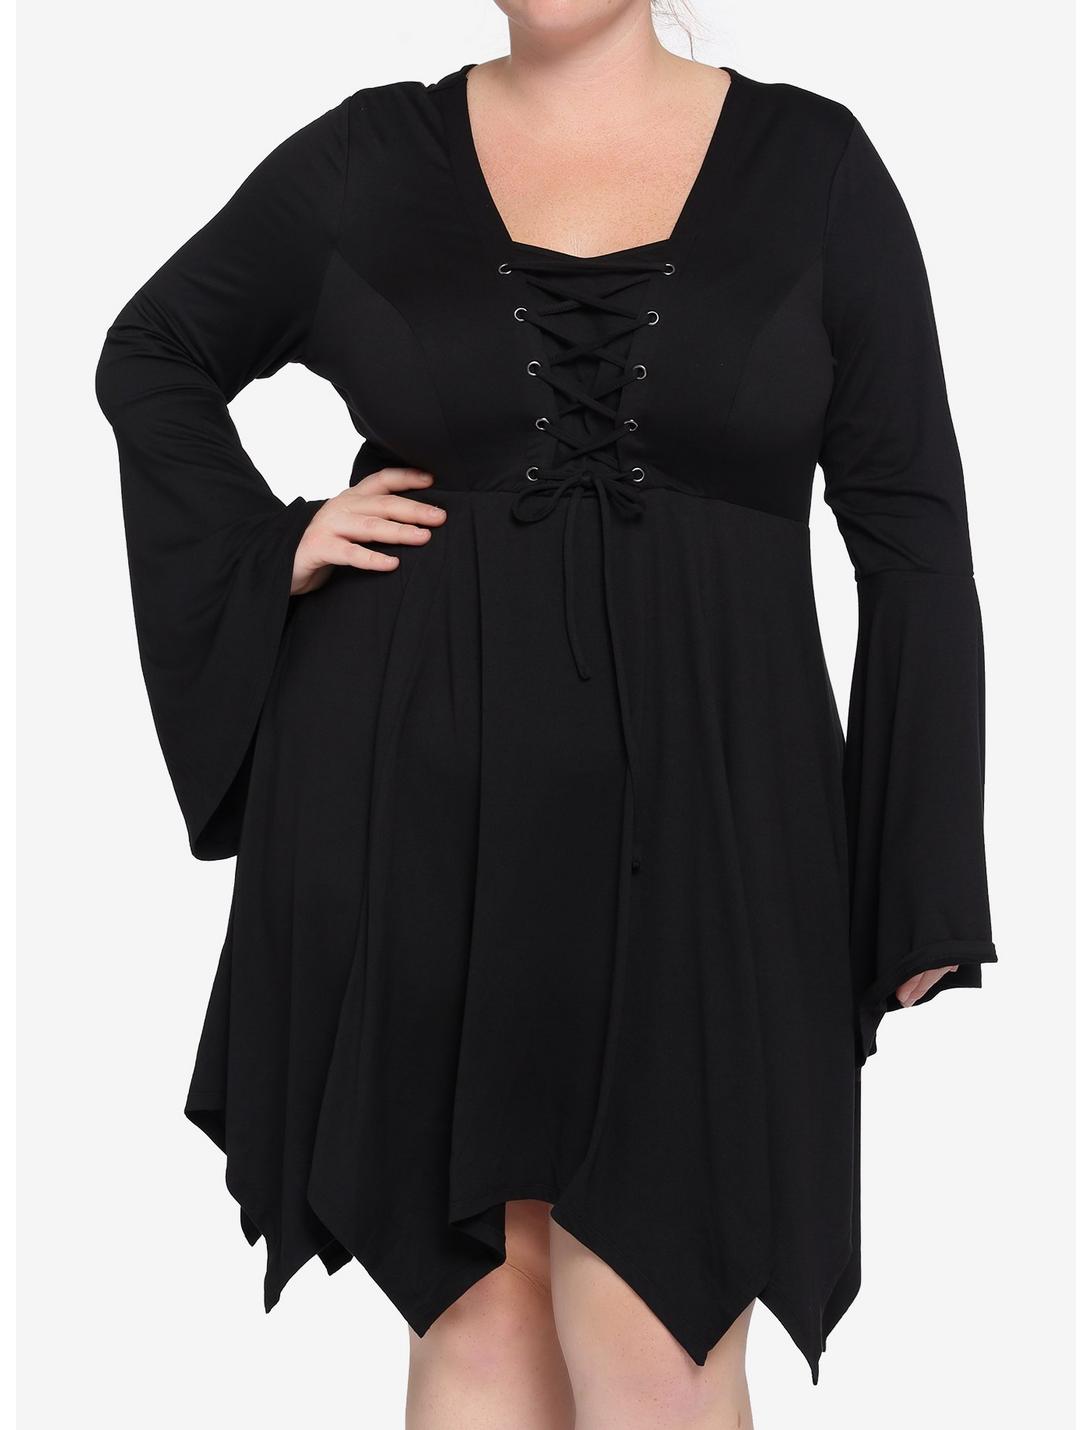 Black Lace-Up Hanky Hem Dress Plus Size, BLACK, hi-res